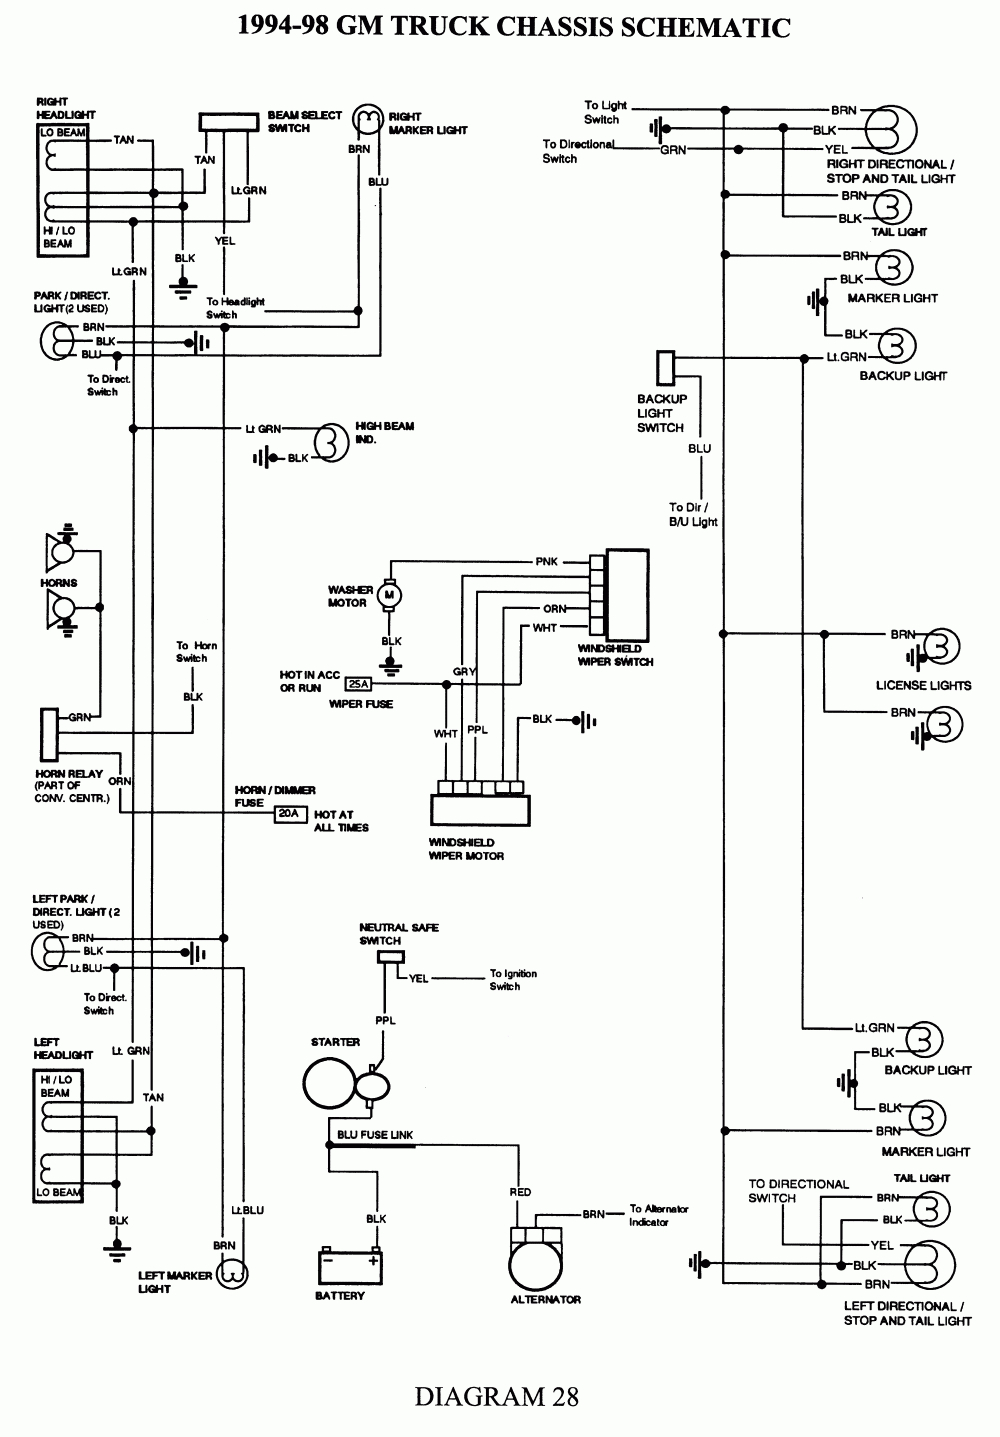 2002 Gm Turn Signal Wiring Diagram - Electrical Schematic Wiring - Brake And Turn Signal Wiring Diagram